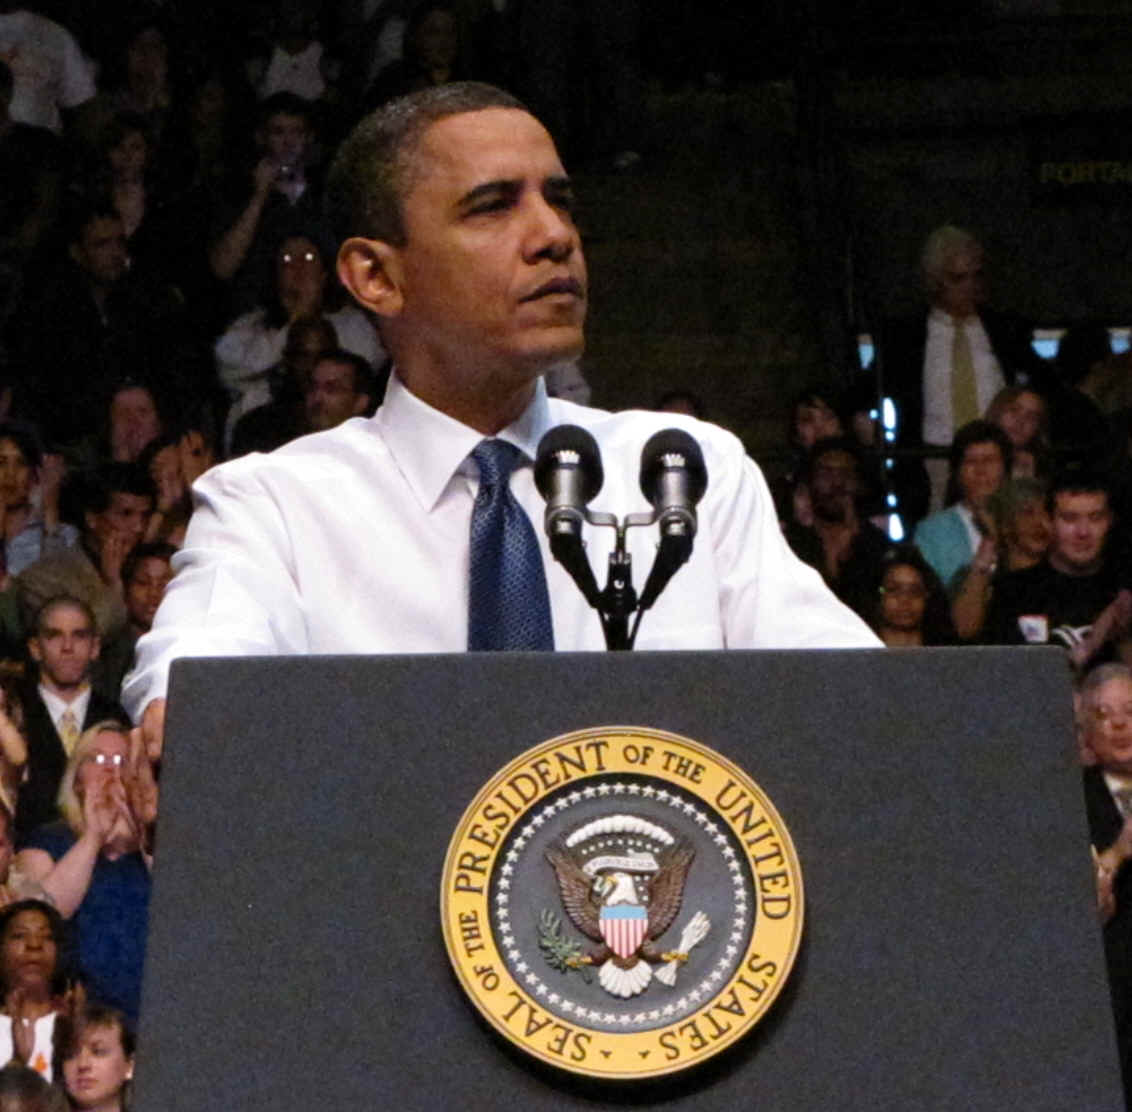 President Obama delivering a speech on health care reform